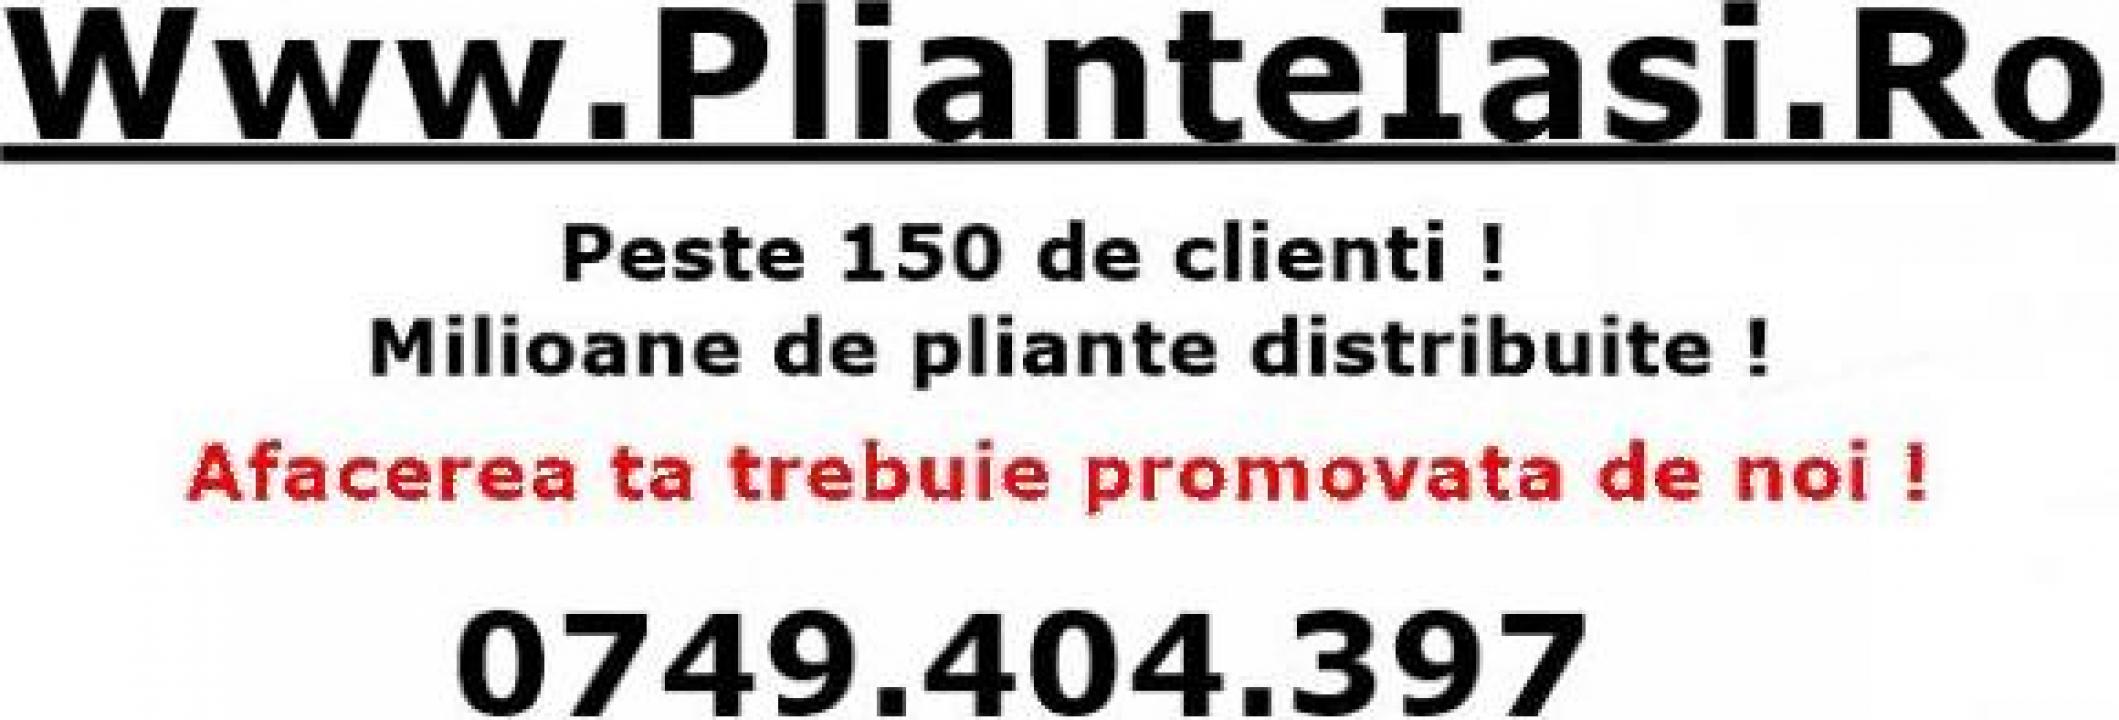 Marquee The nicotine Servicii distributie pliante, flyere in Iasi - Iasi - PlianteIasi Services,  ID: 1377173, pareri